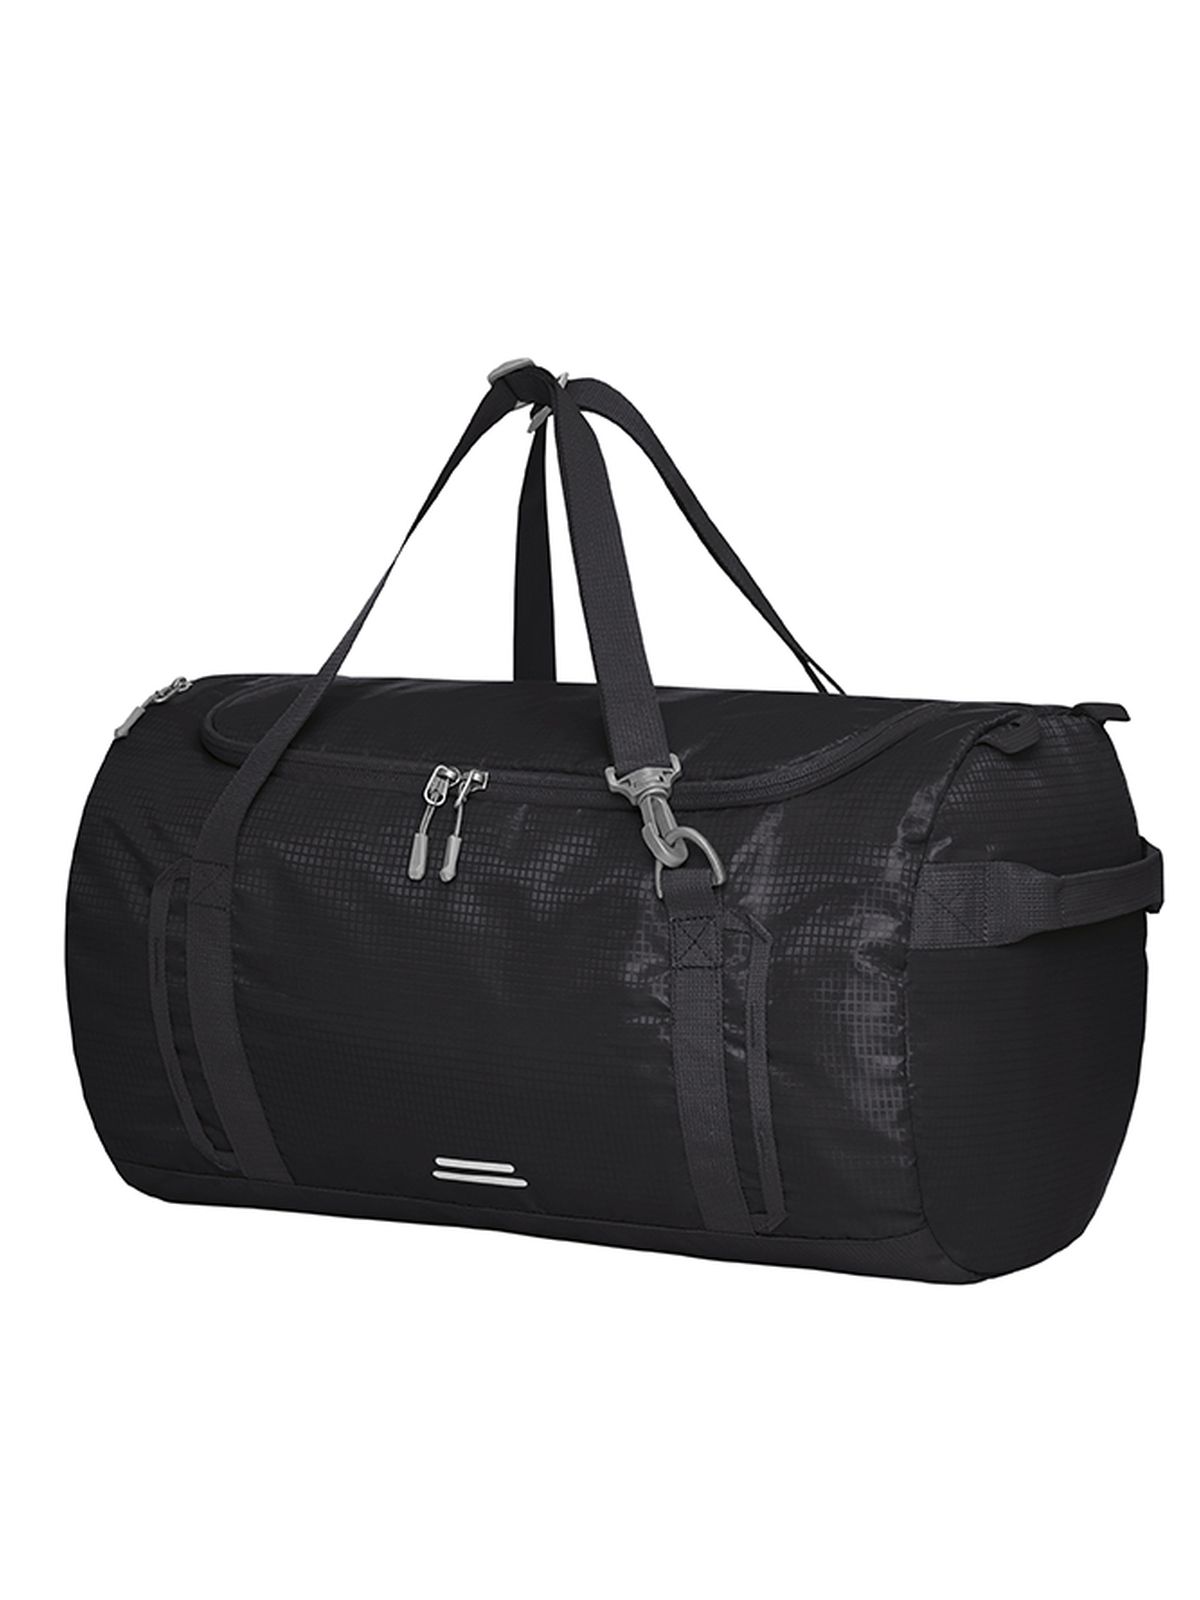 sports-bag-outdoor-black.webp